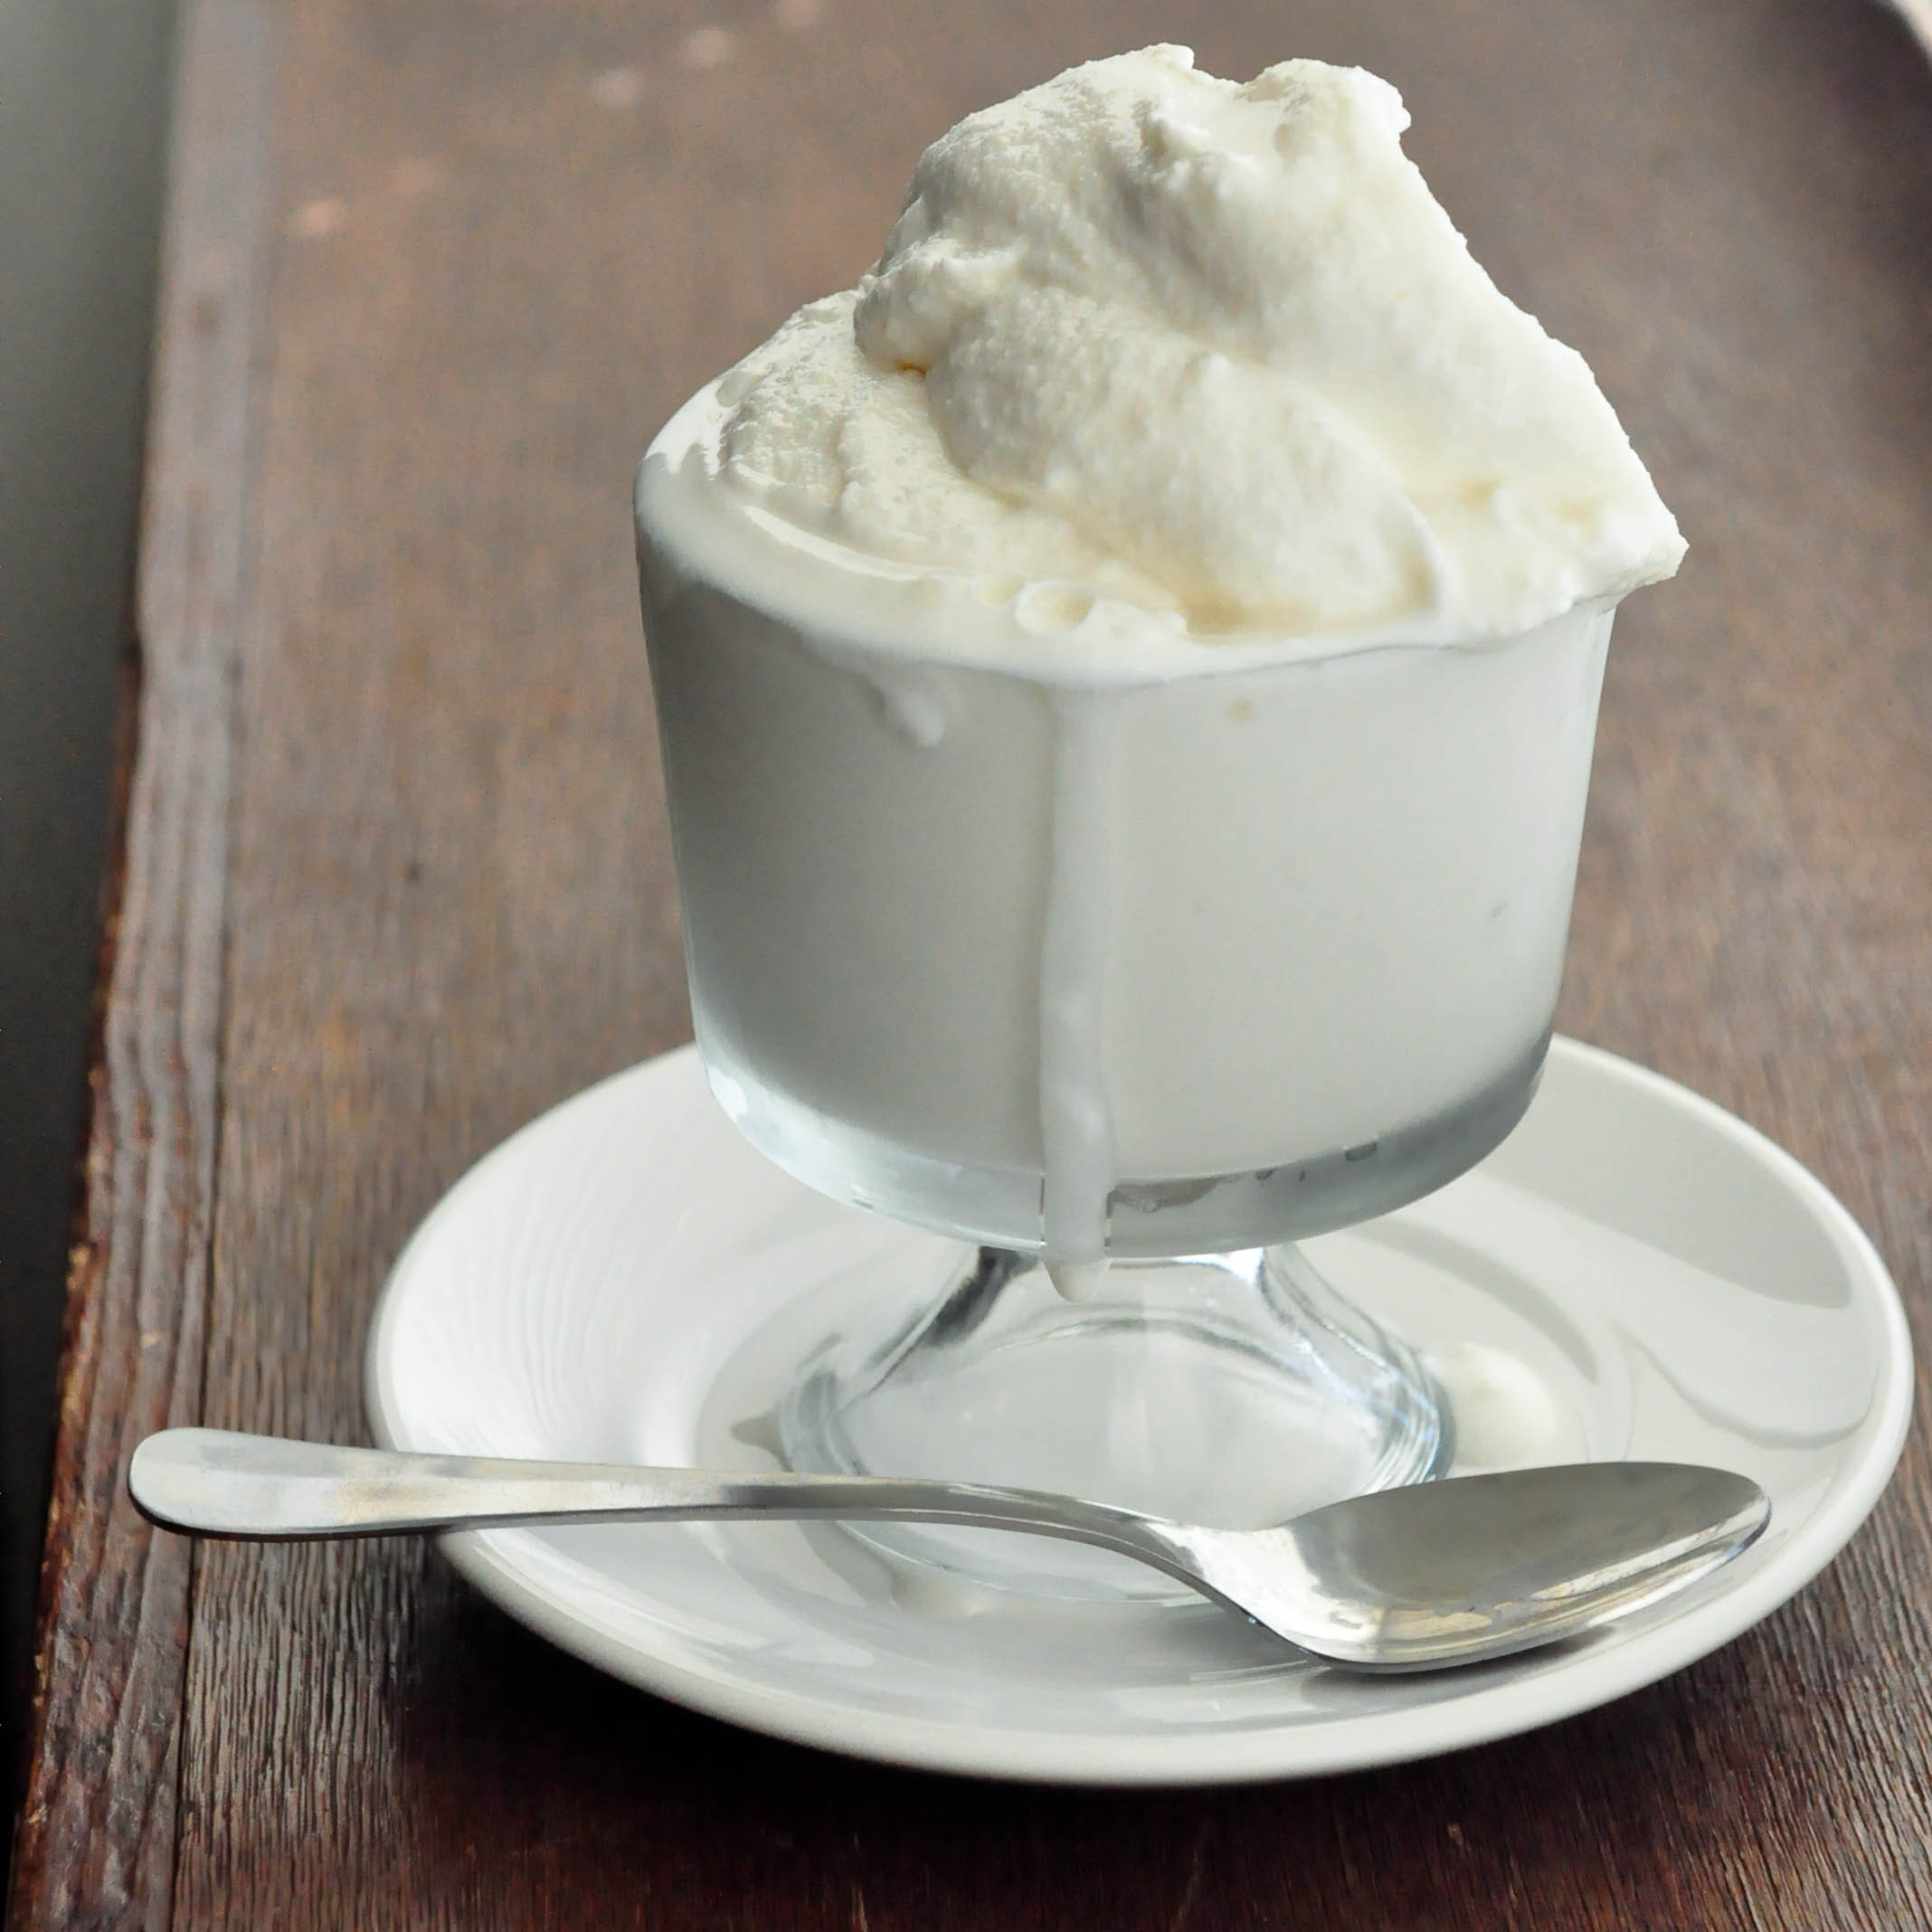 Best ideas about DIY Frozen Yogurt
. Save or Pin Homemade Frozen Yogurt Now.